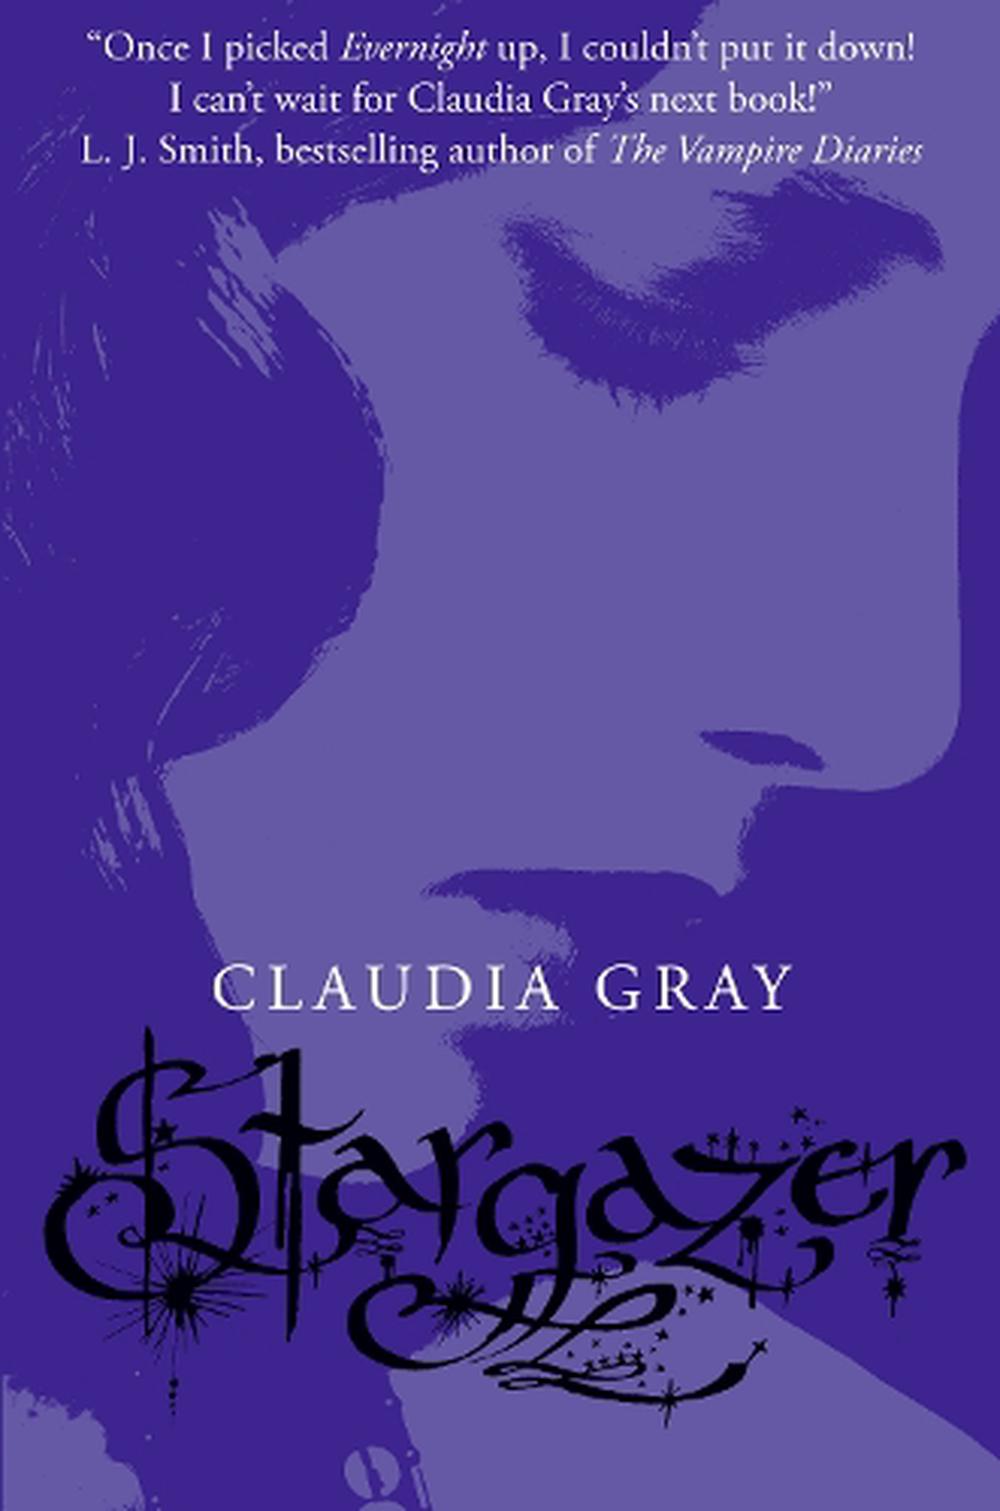 stargazer by claudia gray